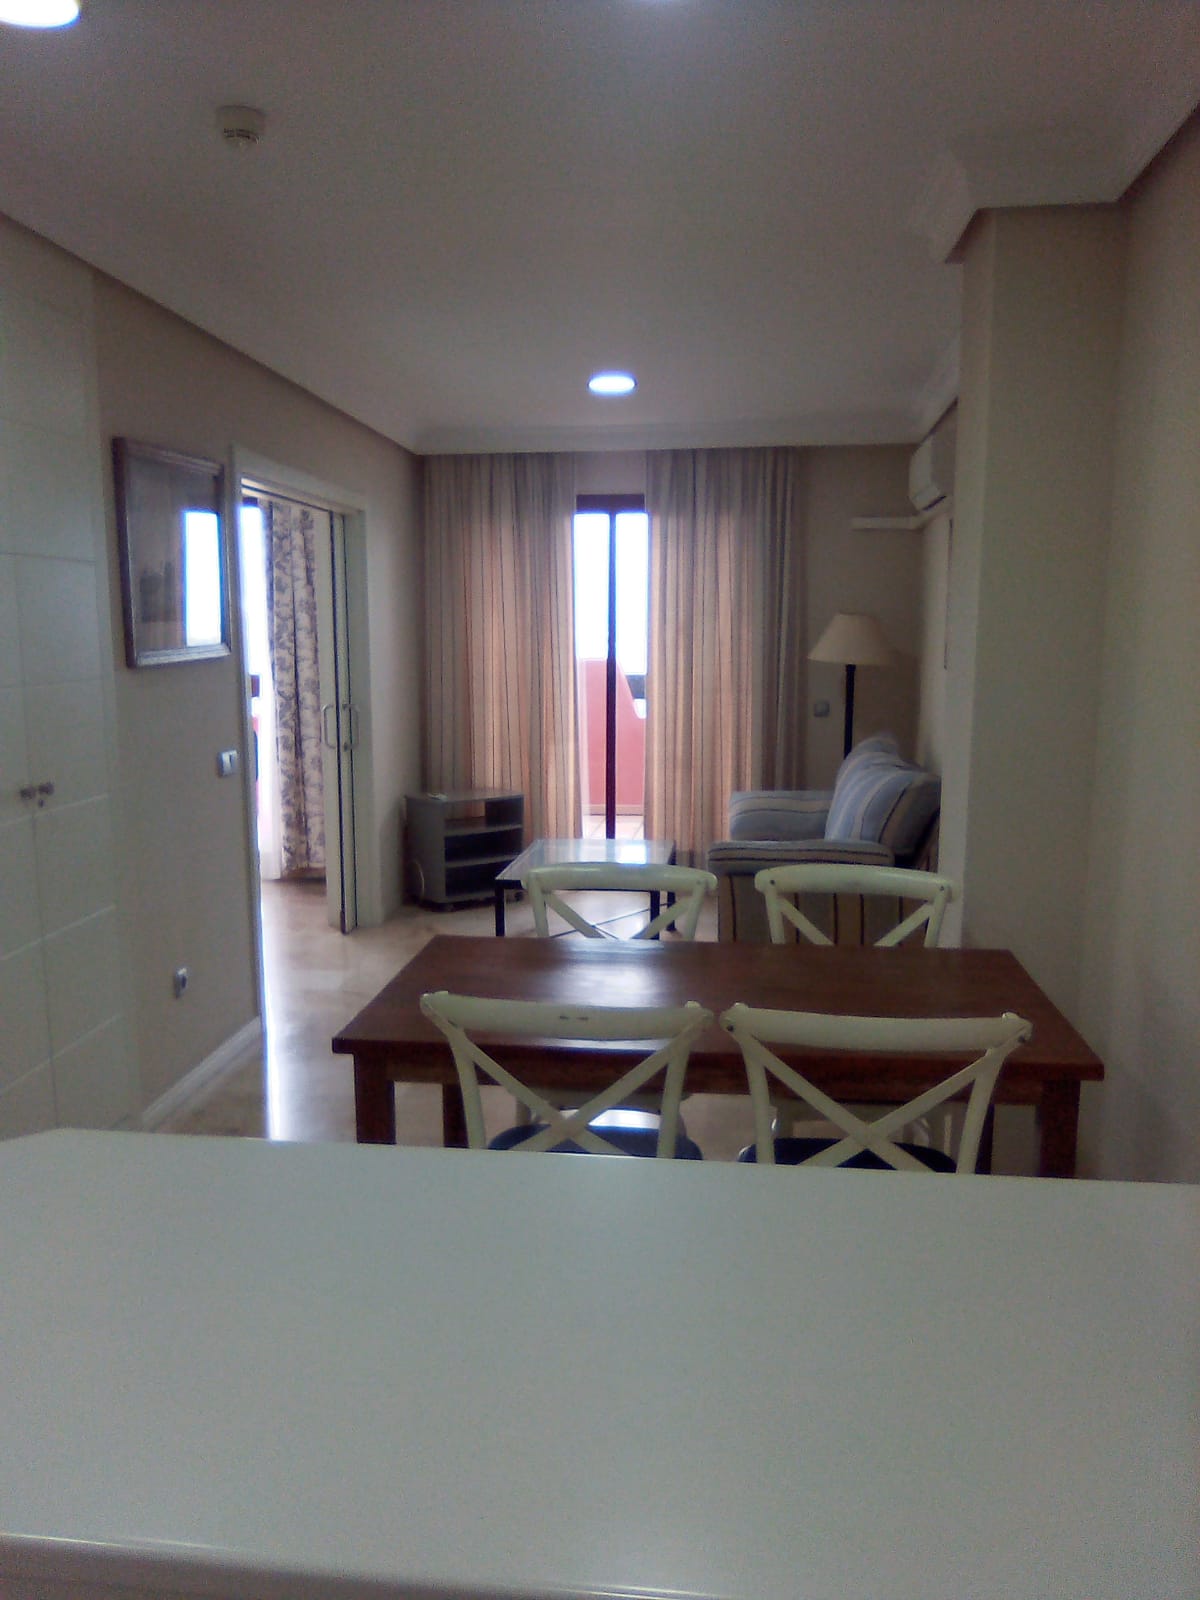 1 bedroom apartment for sale in Manilva - mibgroup.es